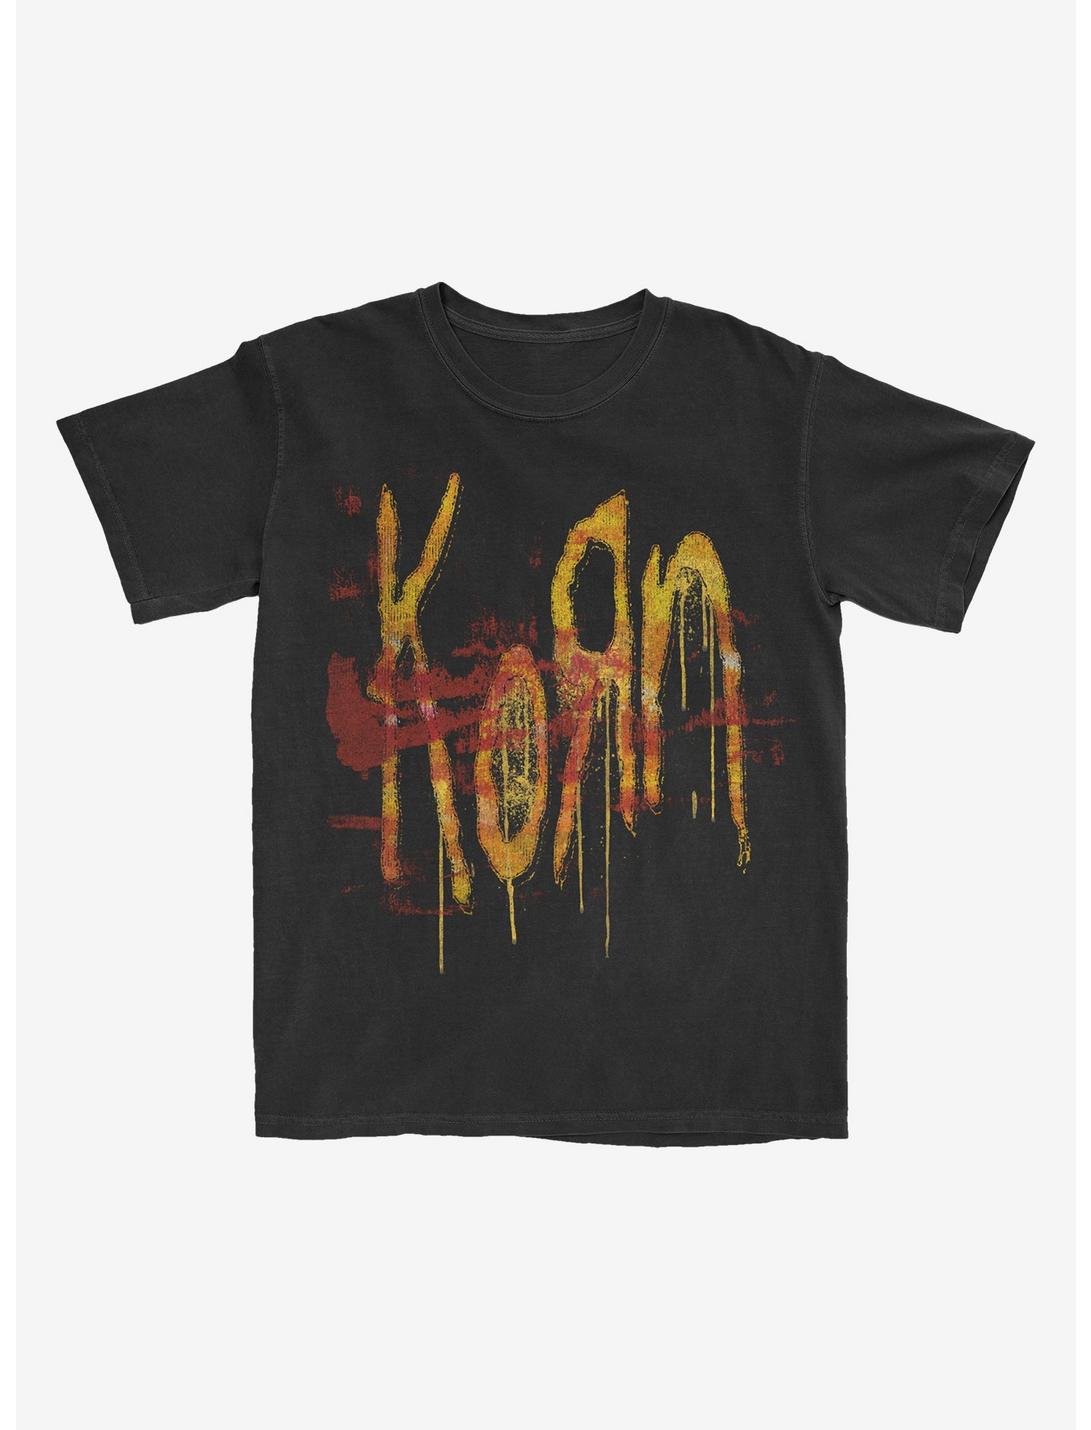 Korn Rust Logo Boyfriend Fit Girls T-Shirt, BLACK, hi-res